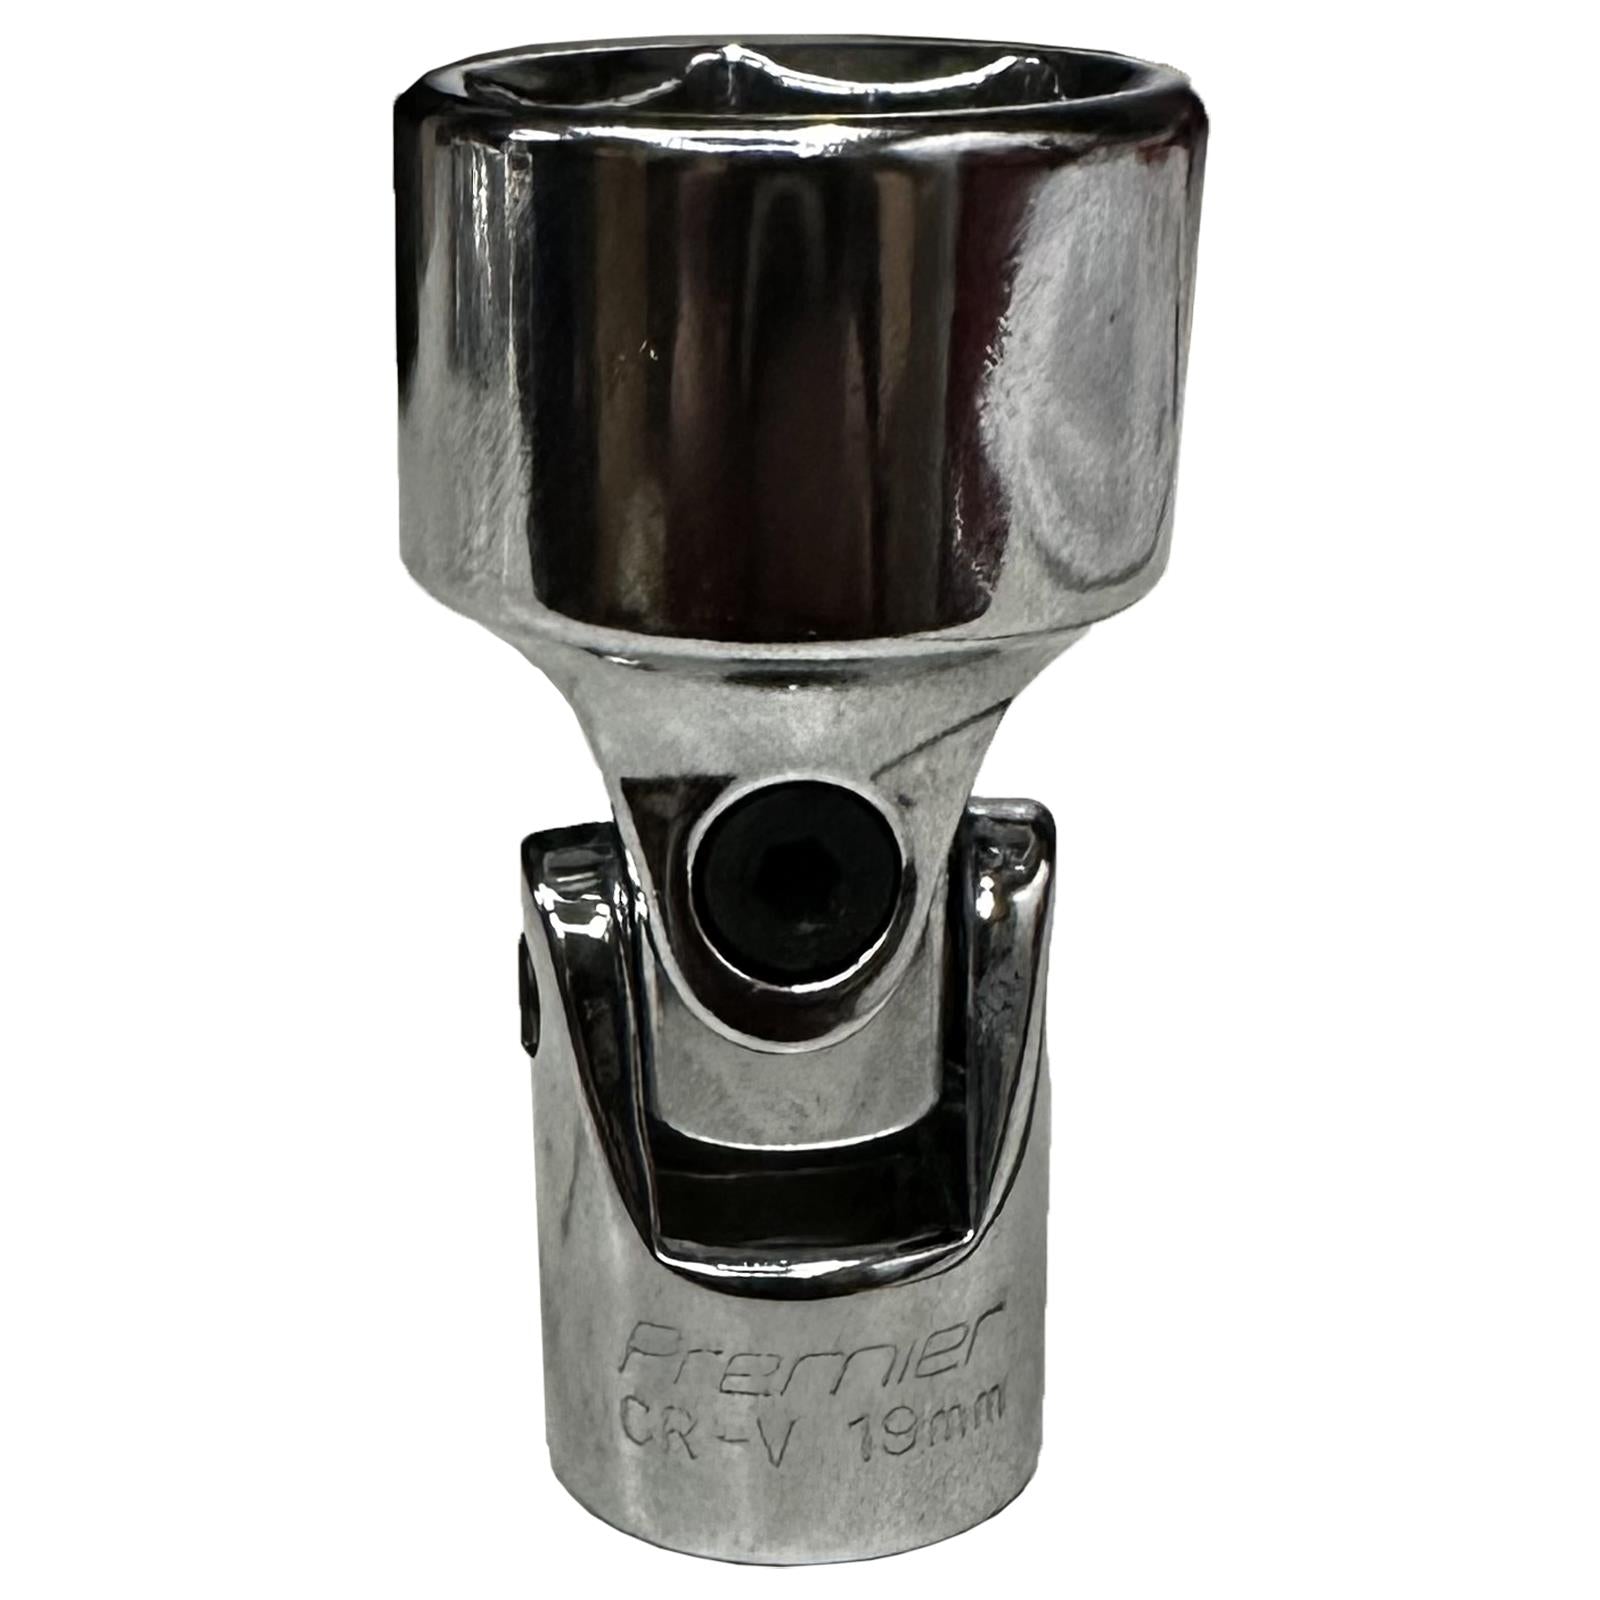 Sealey Universal Joint Socket 19mm 6 Point 3/8" Drive Mechanic Garage Workshop